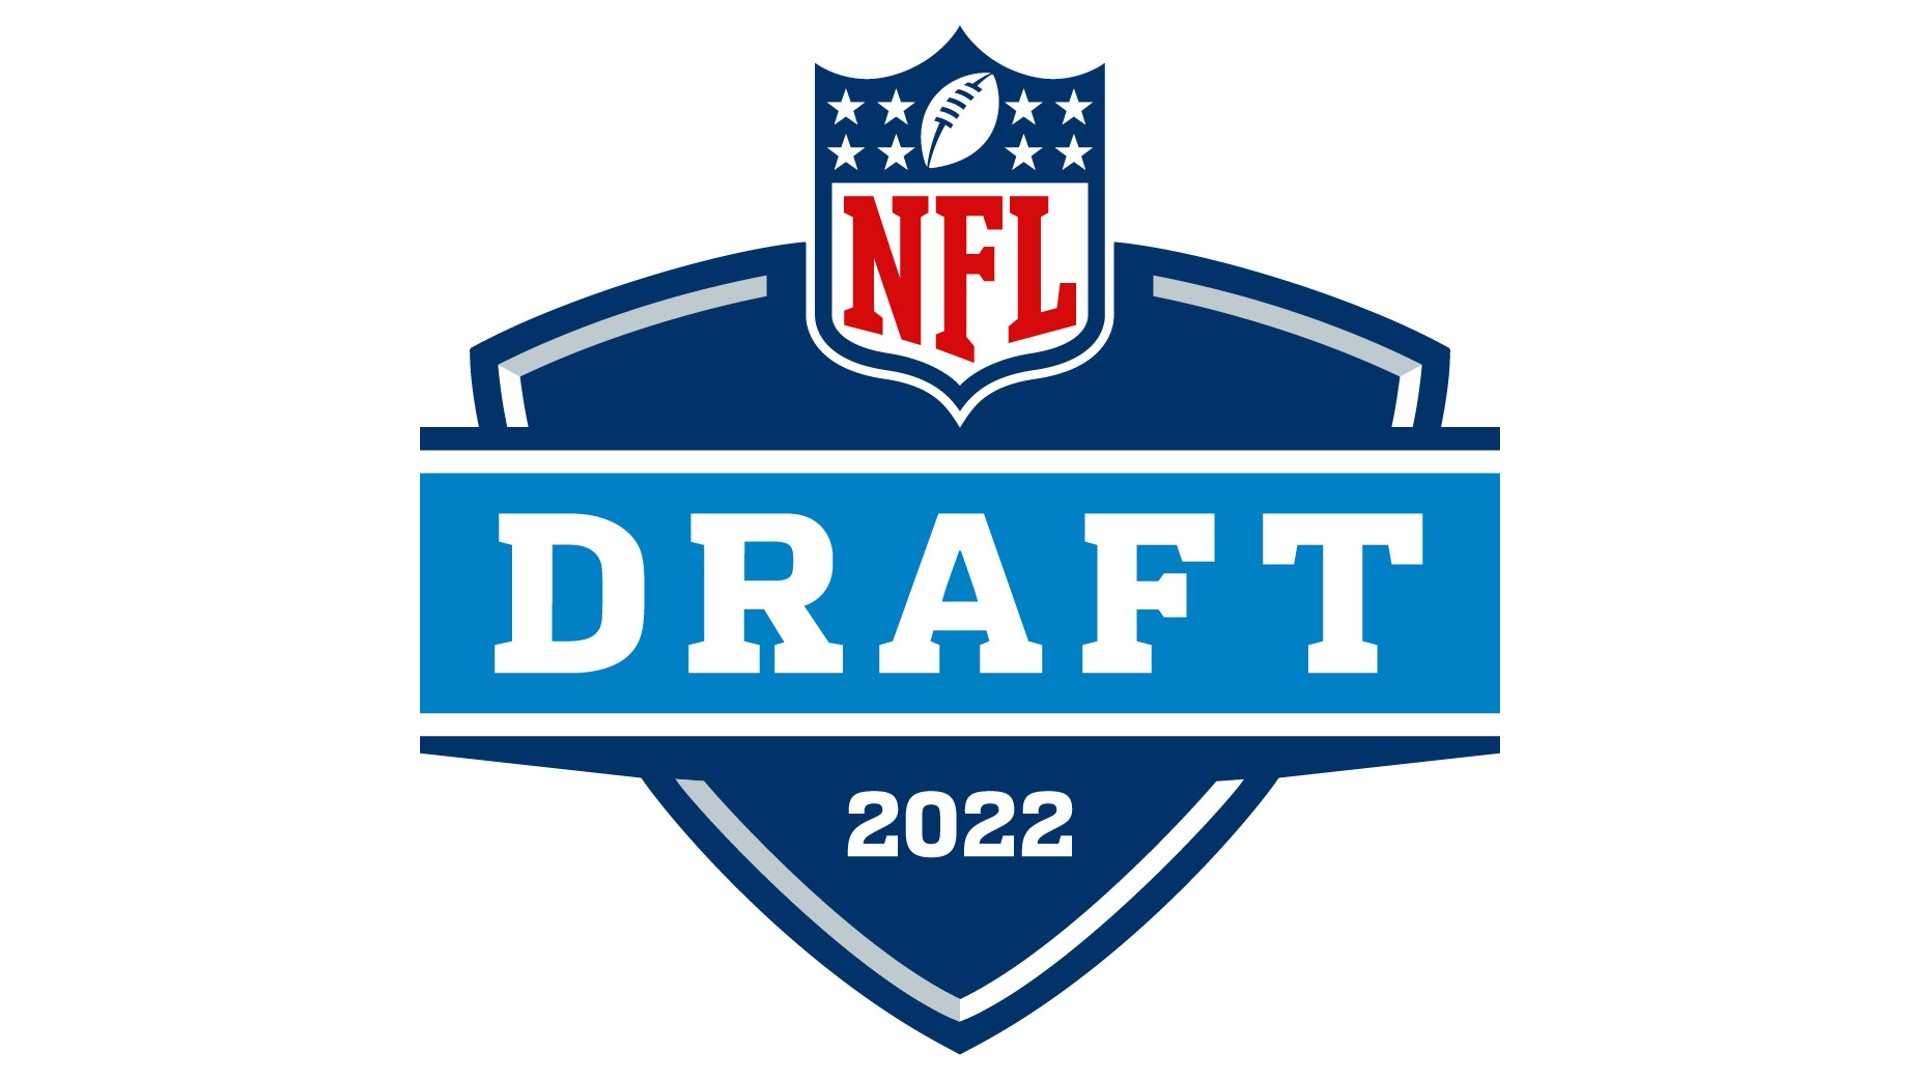 NFL Draft 2022